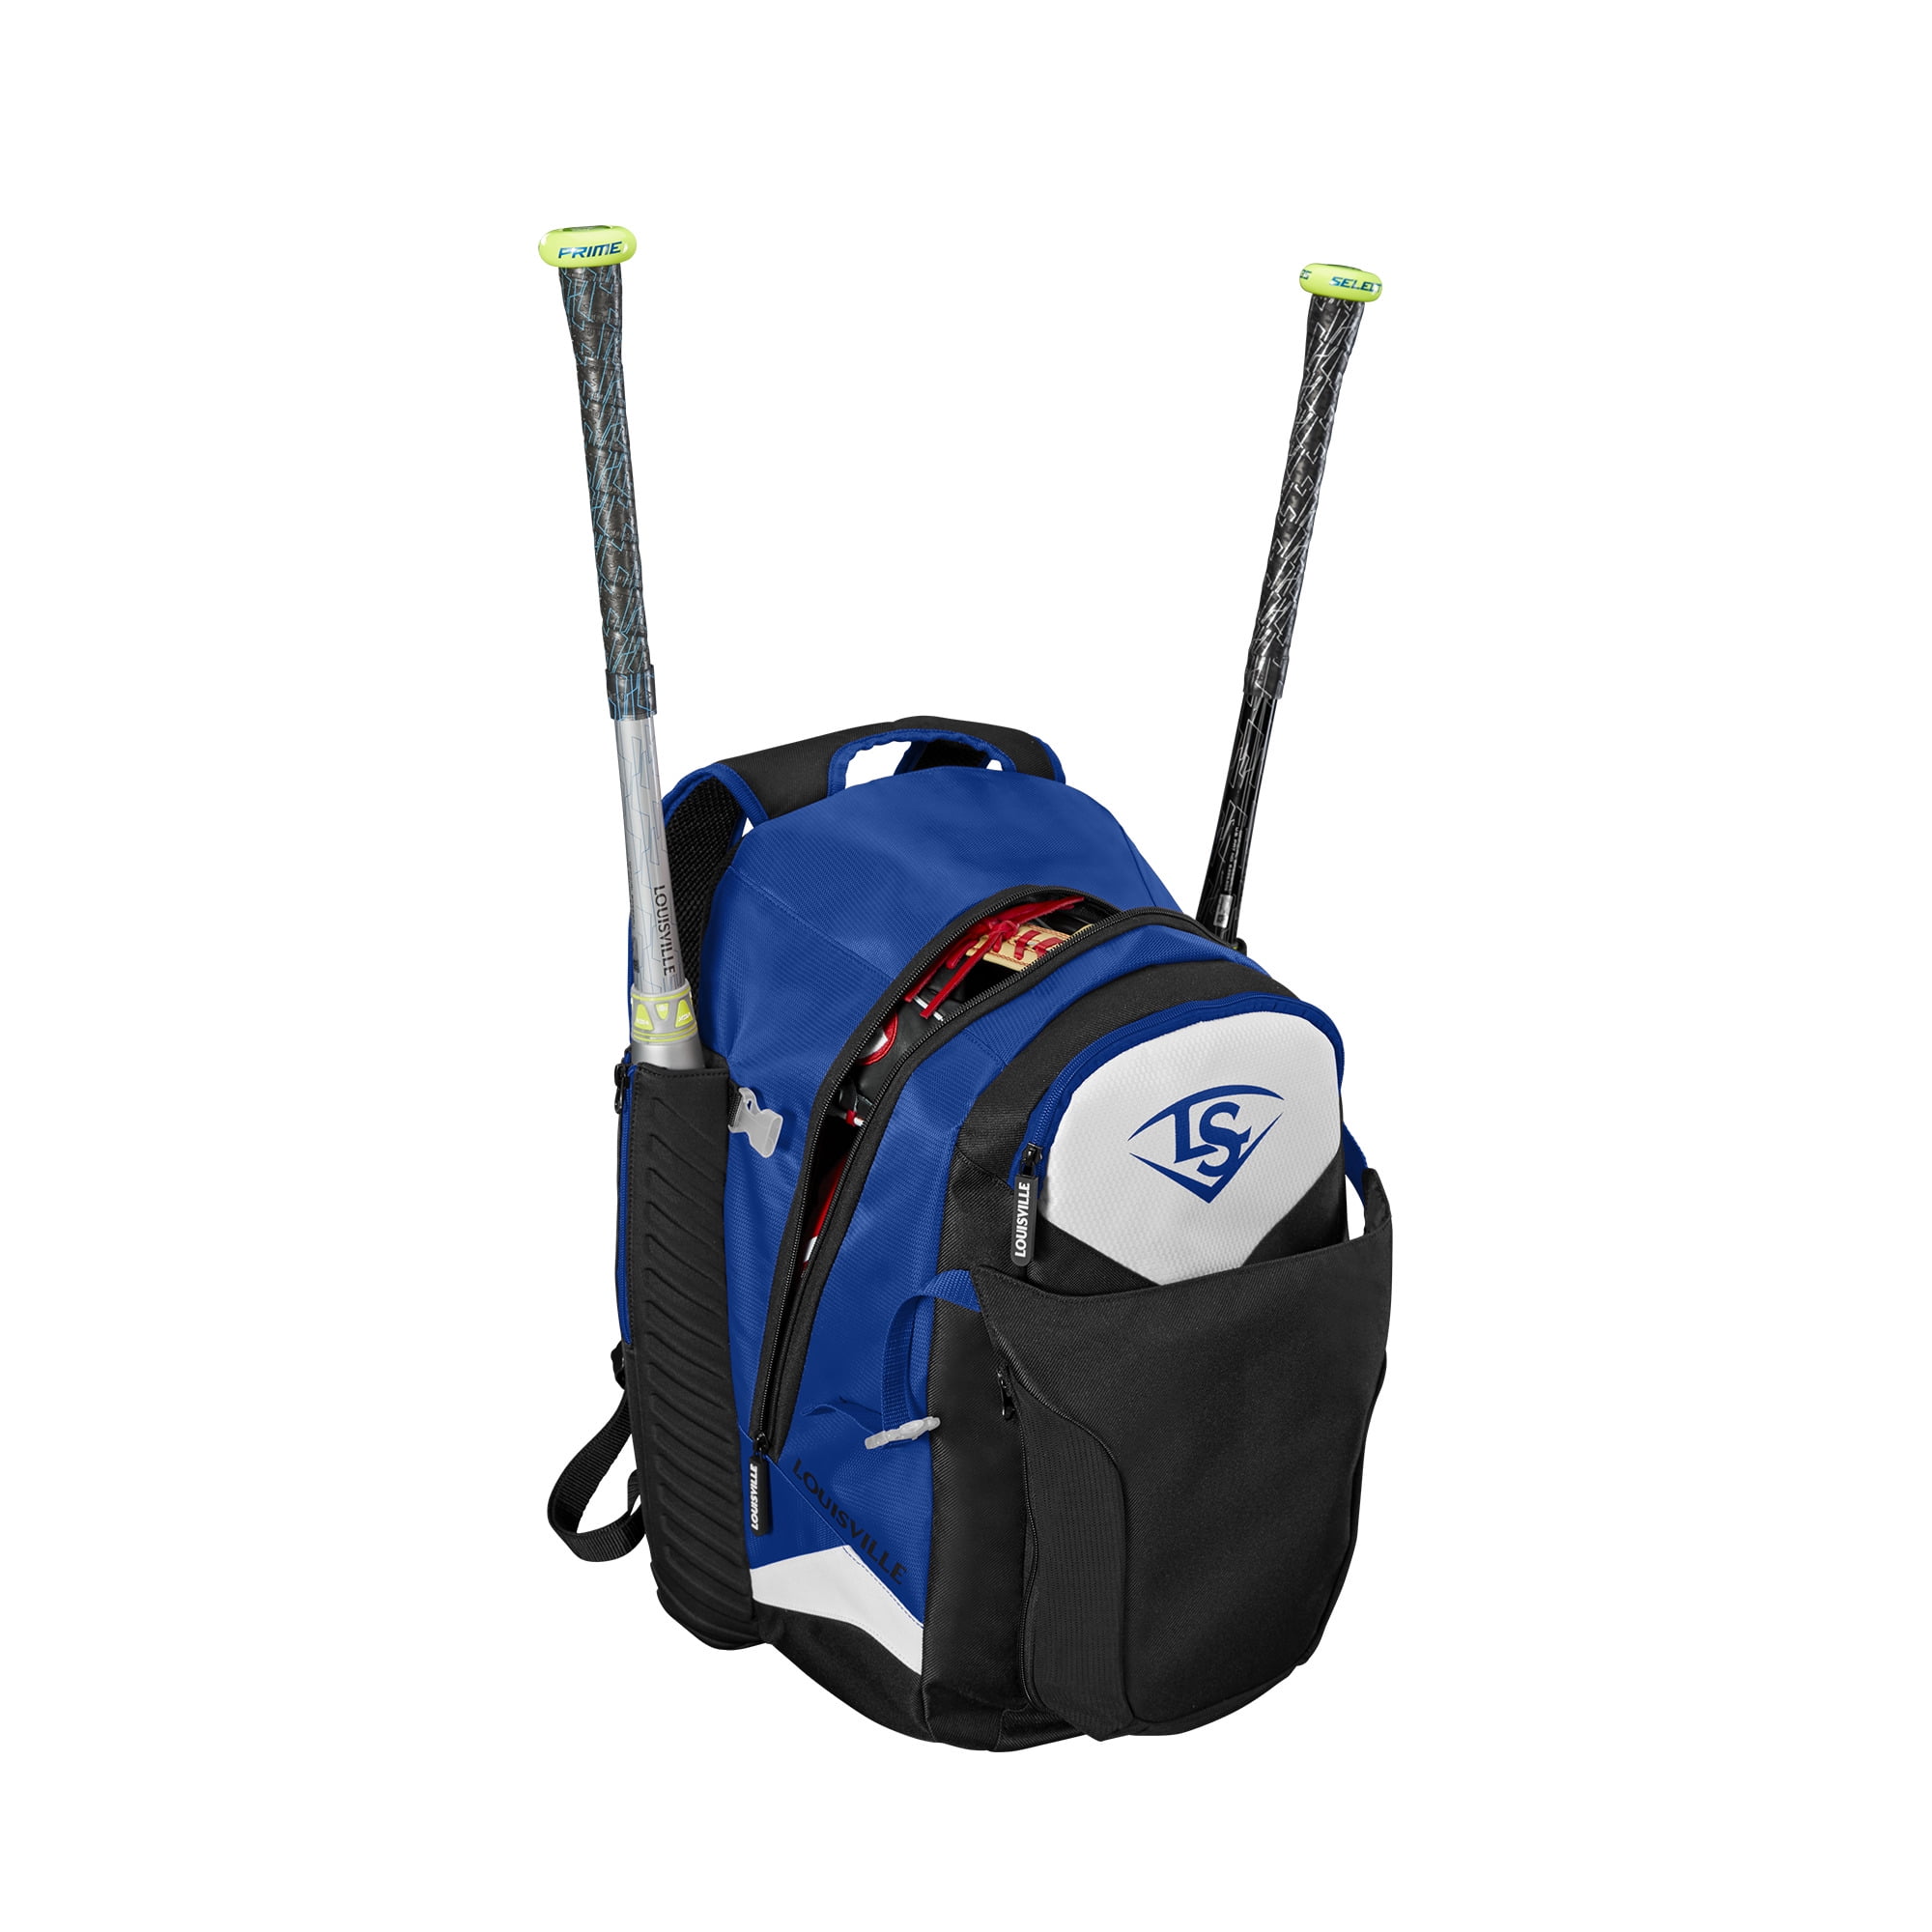 Louisville Slugger Prime Stick Pack Backpack 2.0 White